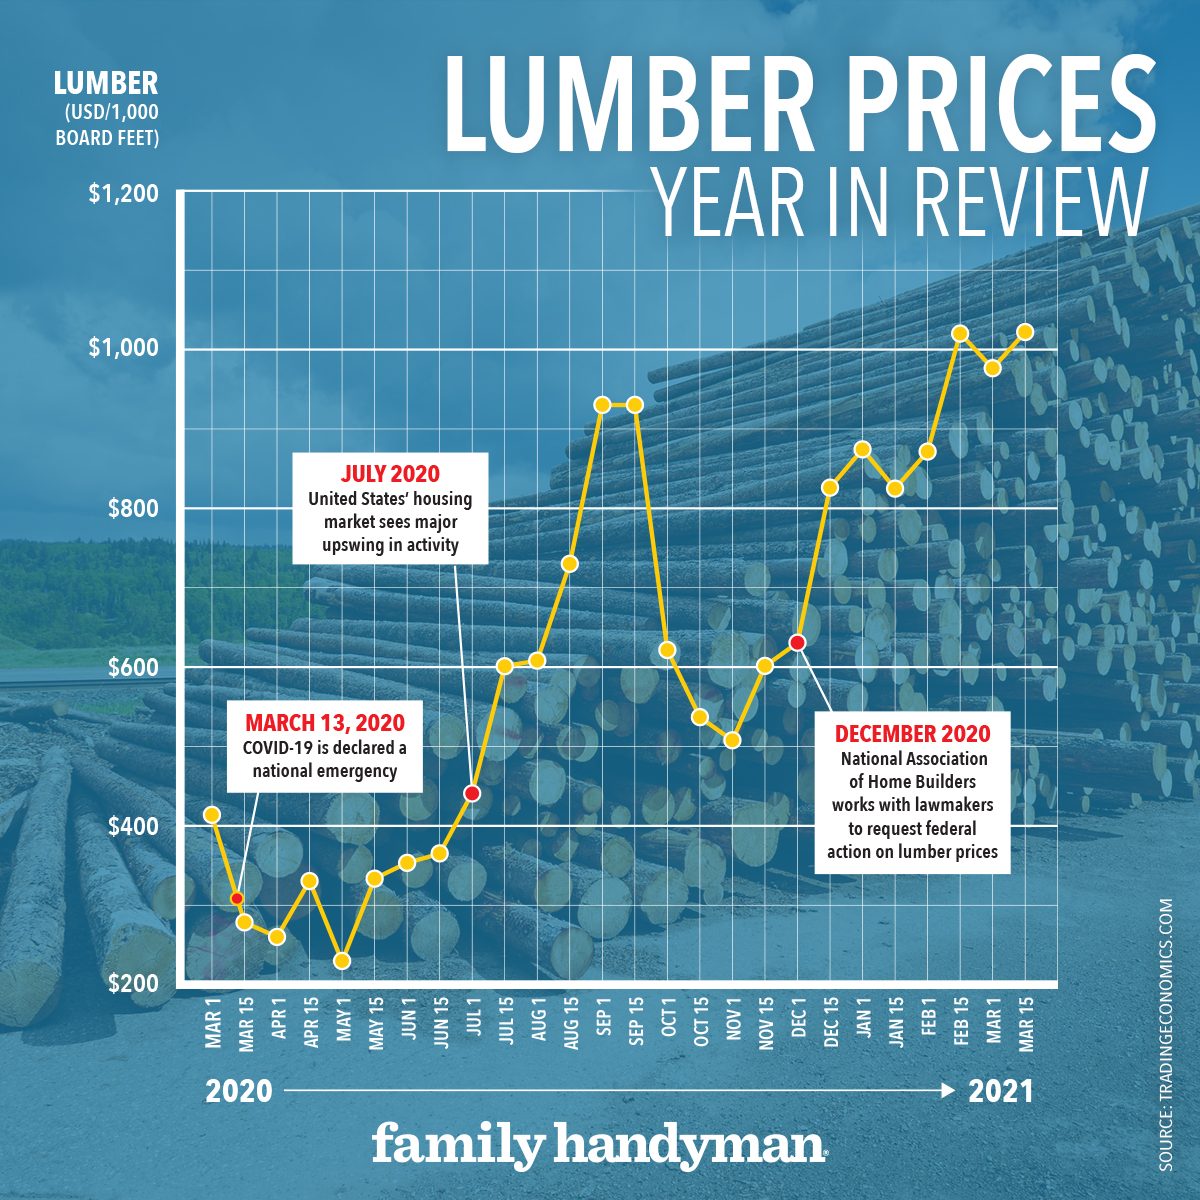 Lumberprices